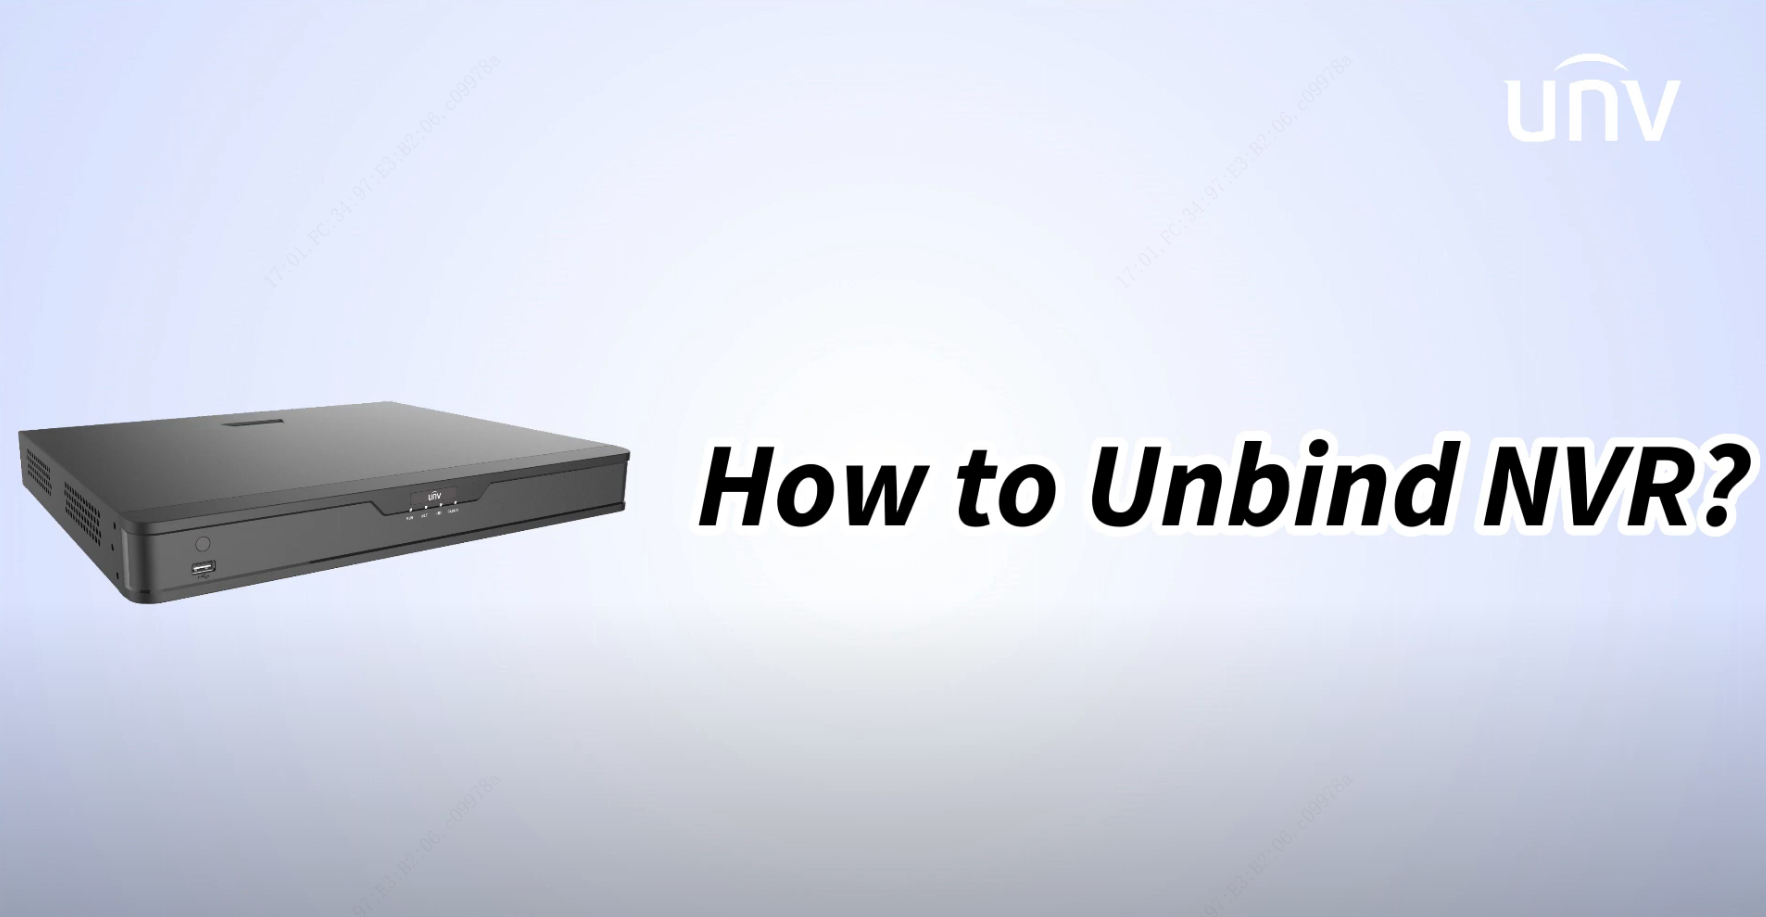 Unbind NVR Image